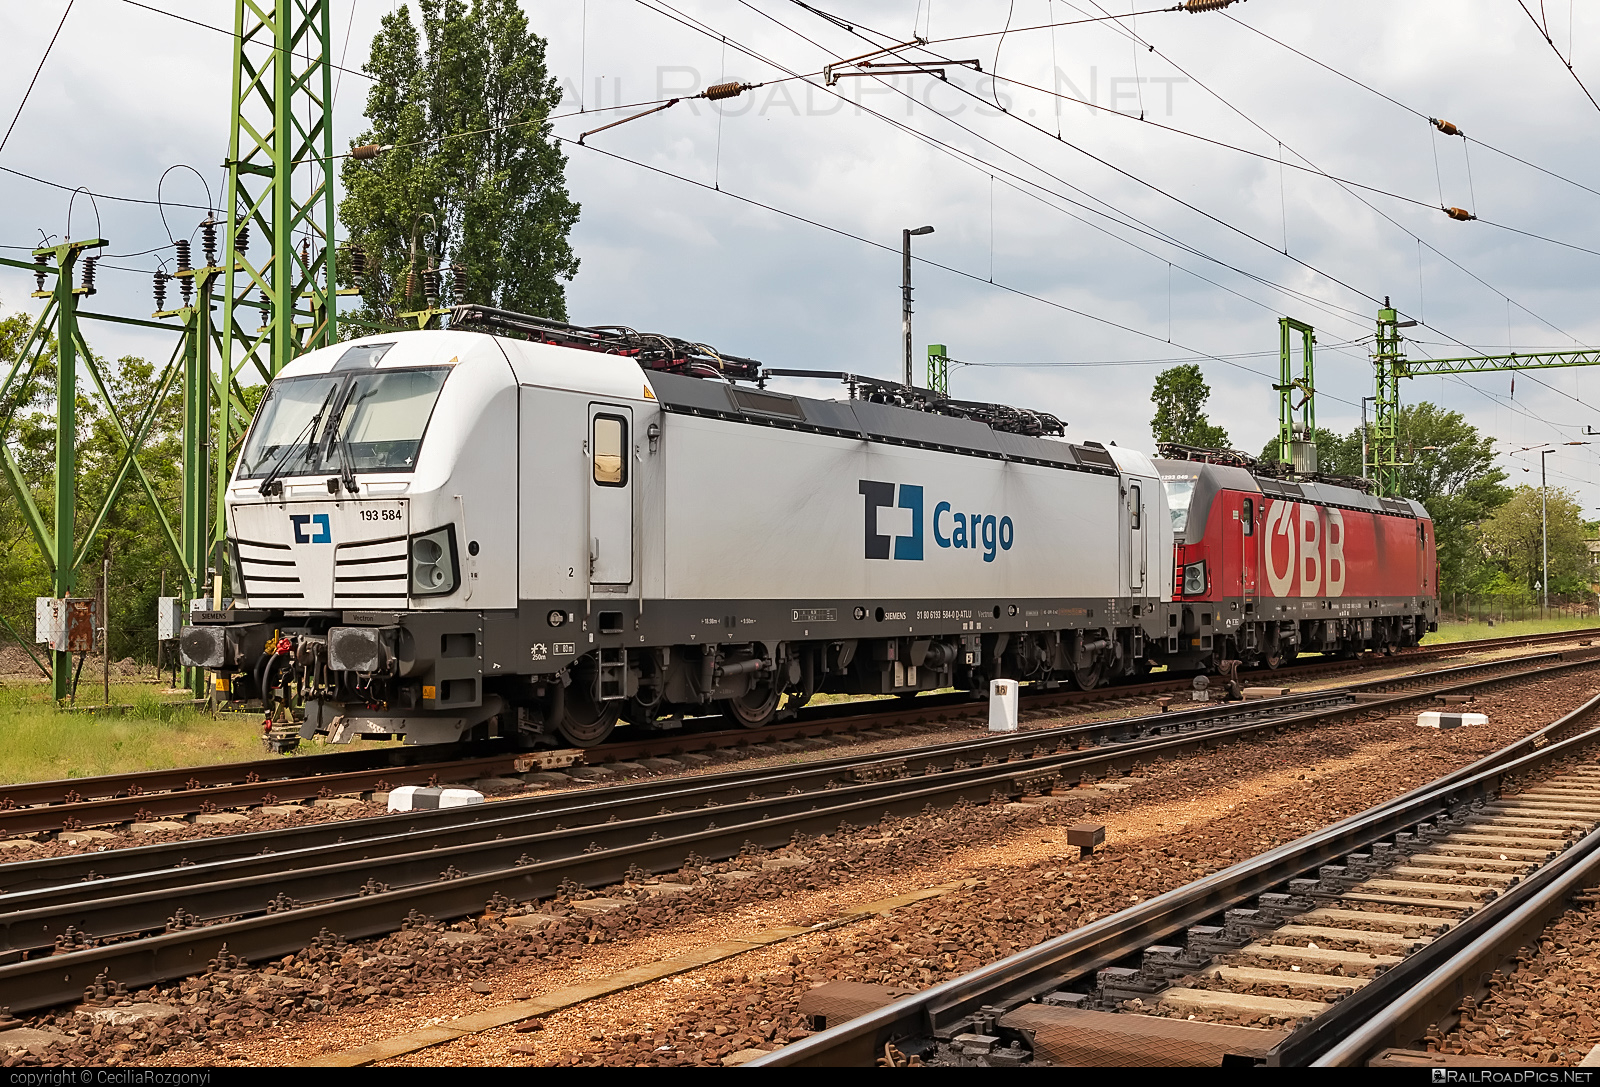 Siemens Vectron MS - 193 584 operated by ČD Cargo, a.s. #alphatrainsluxembourg #cdcargo #siemens #siemensVectron #siemensVectronMS #vectron #vectronMS